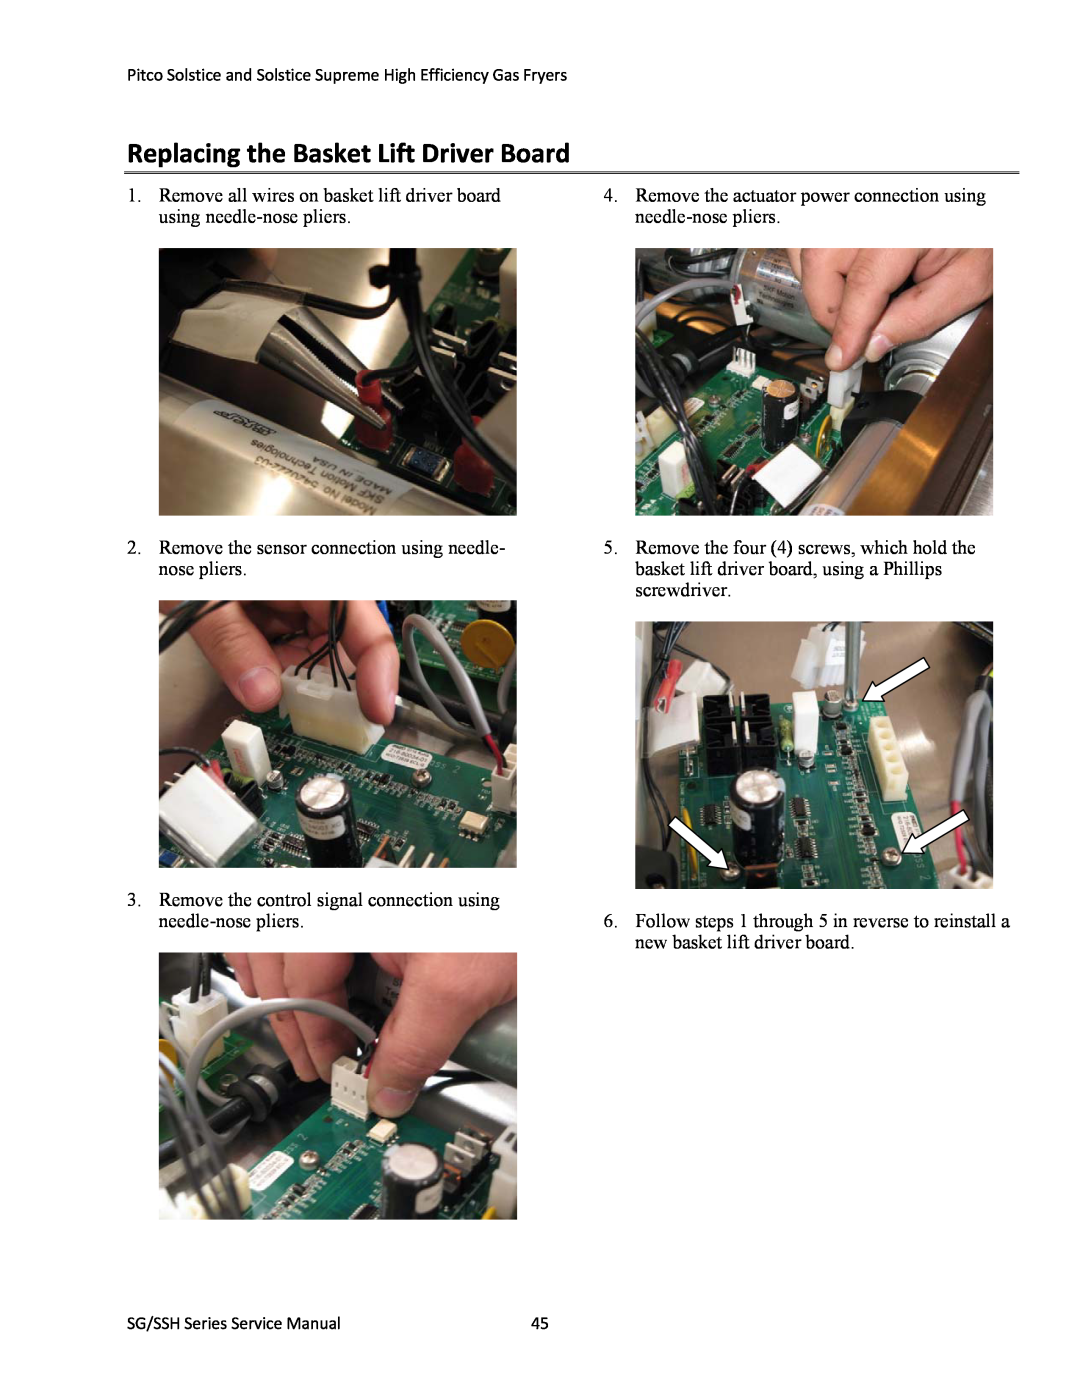 Pitco Frialator L22-345 manual Replacing the Basket Lift Driver Board, SG/SSH Series Service Manual 